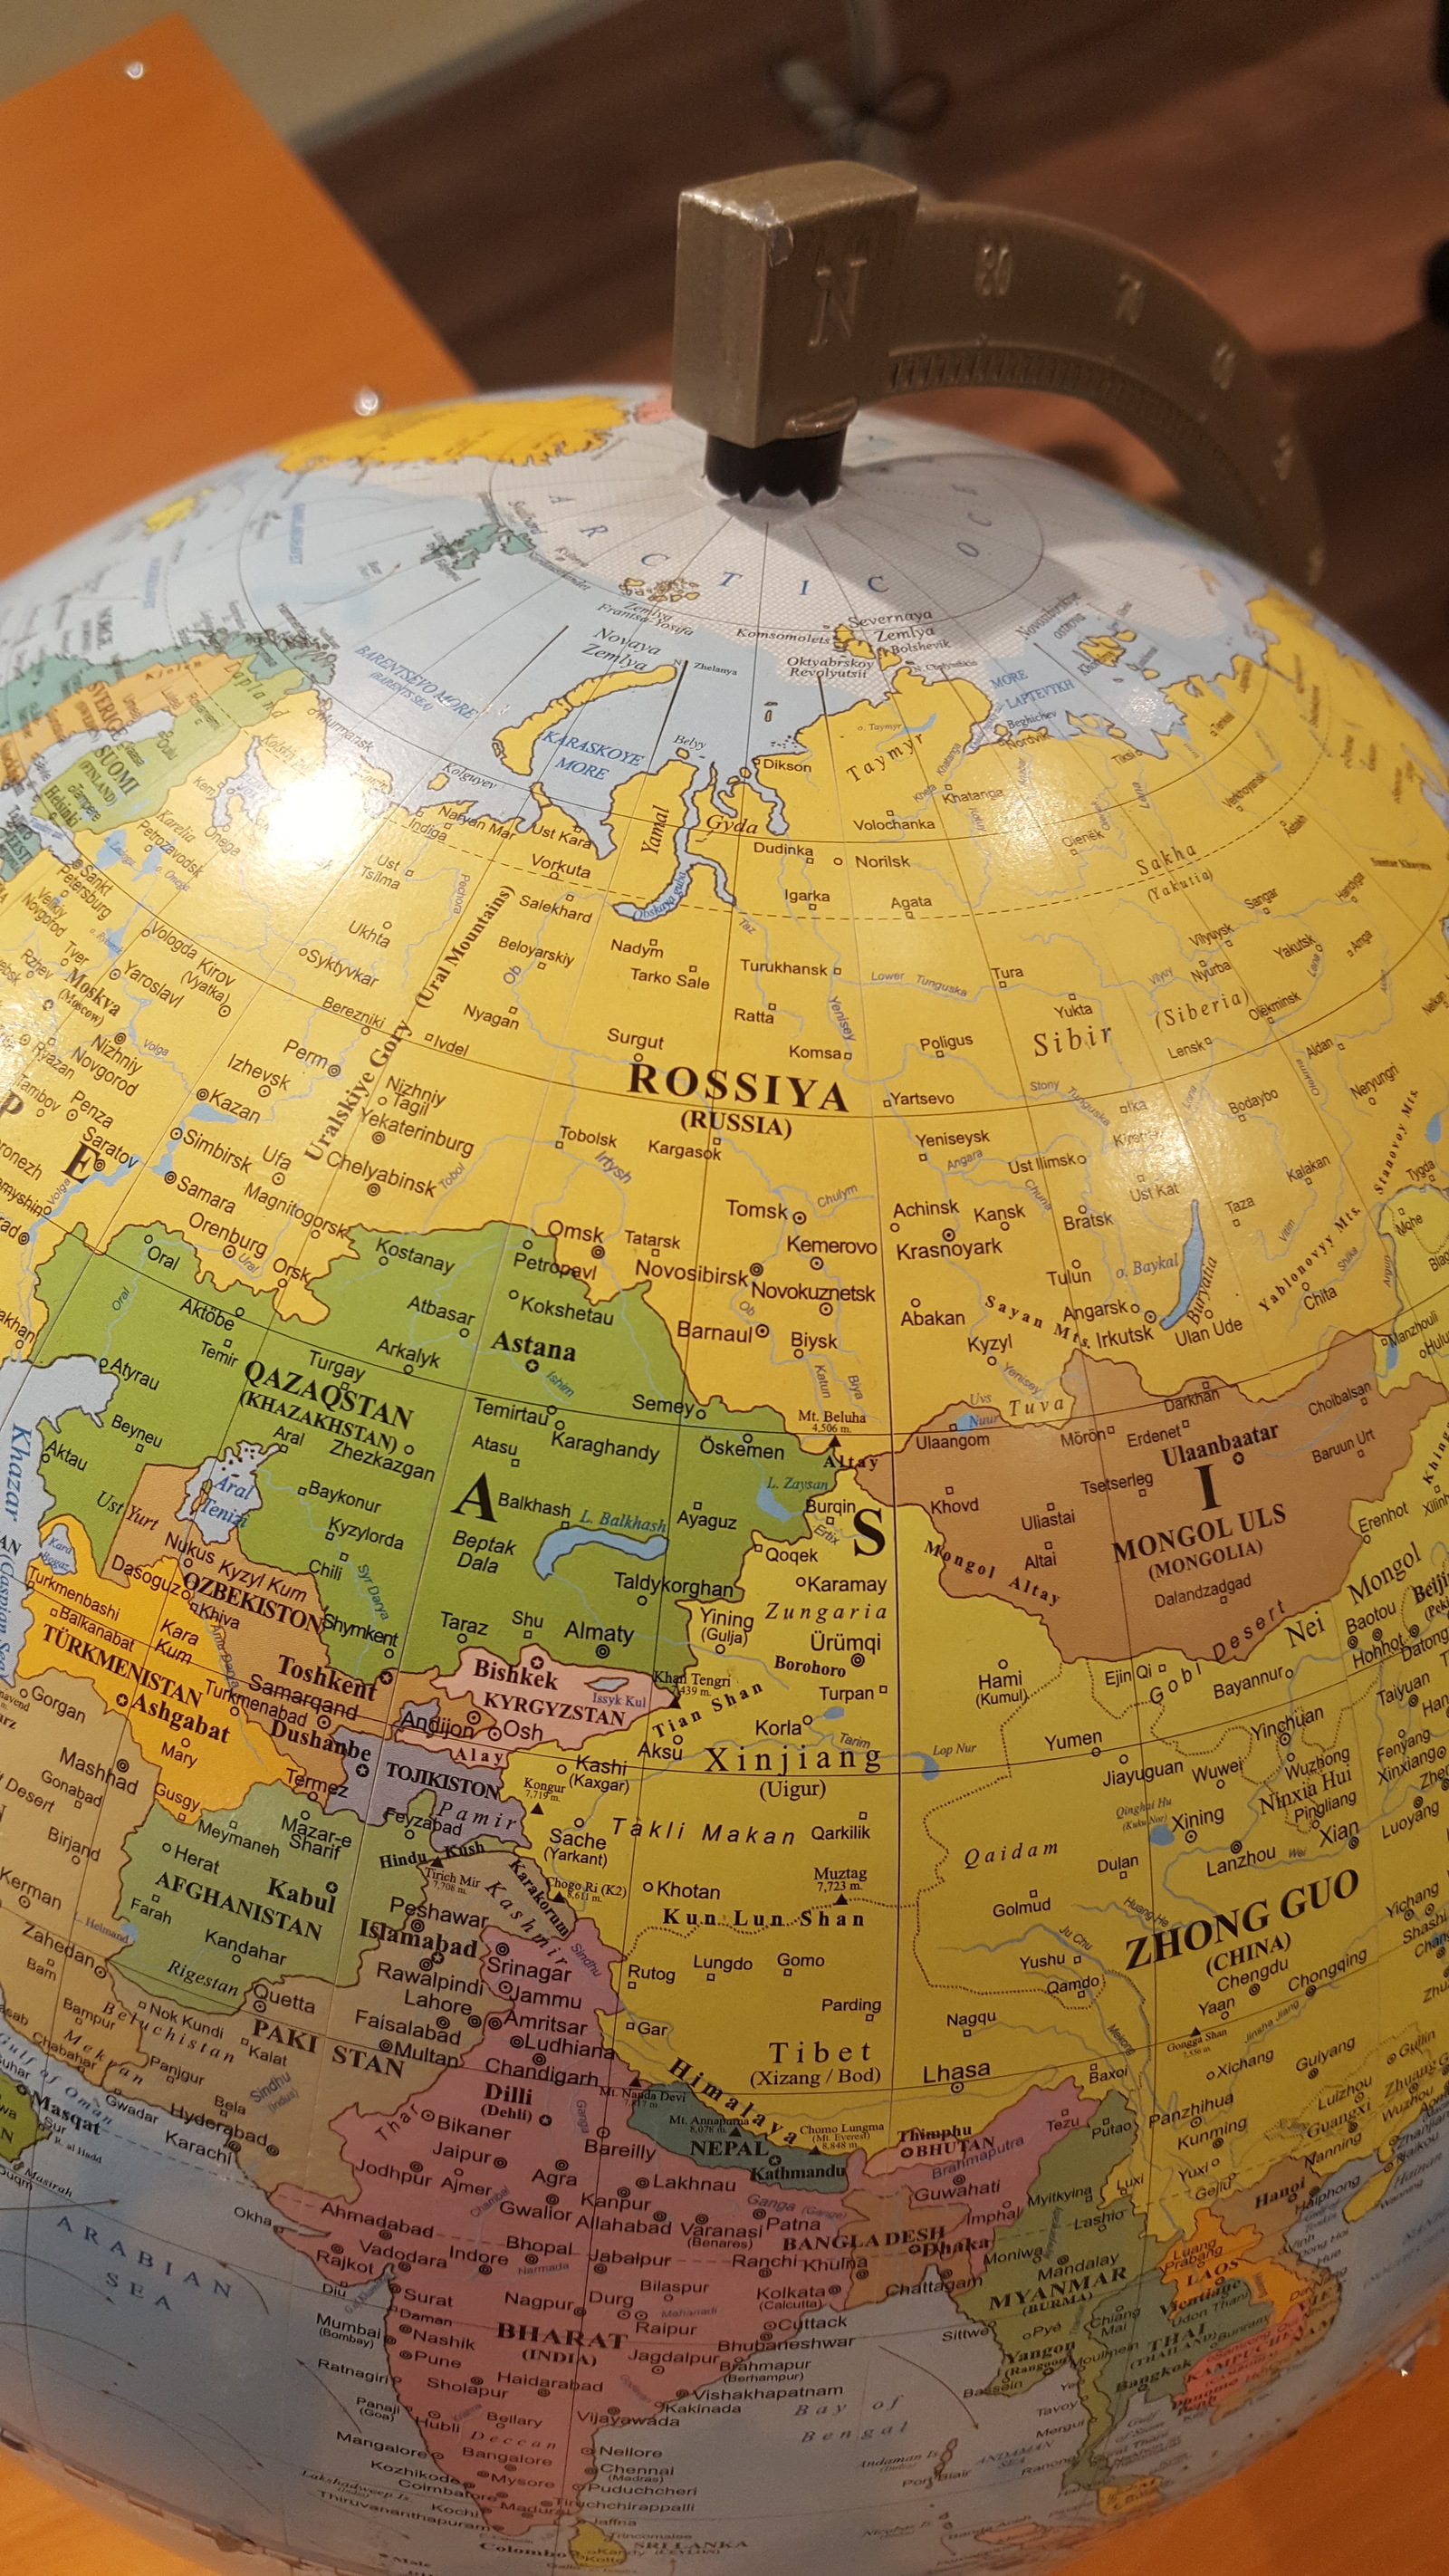 Ser'youzno bl'yat?? - My, Cyrillic, the globe, ?